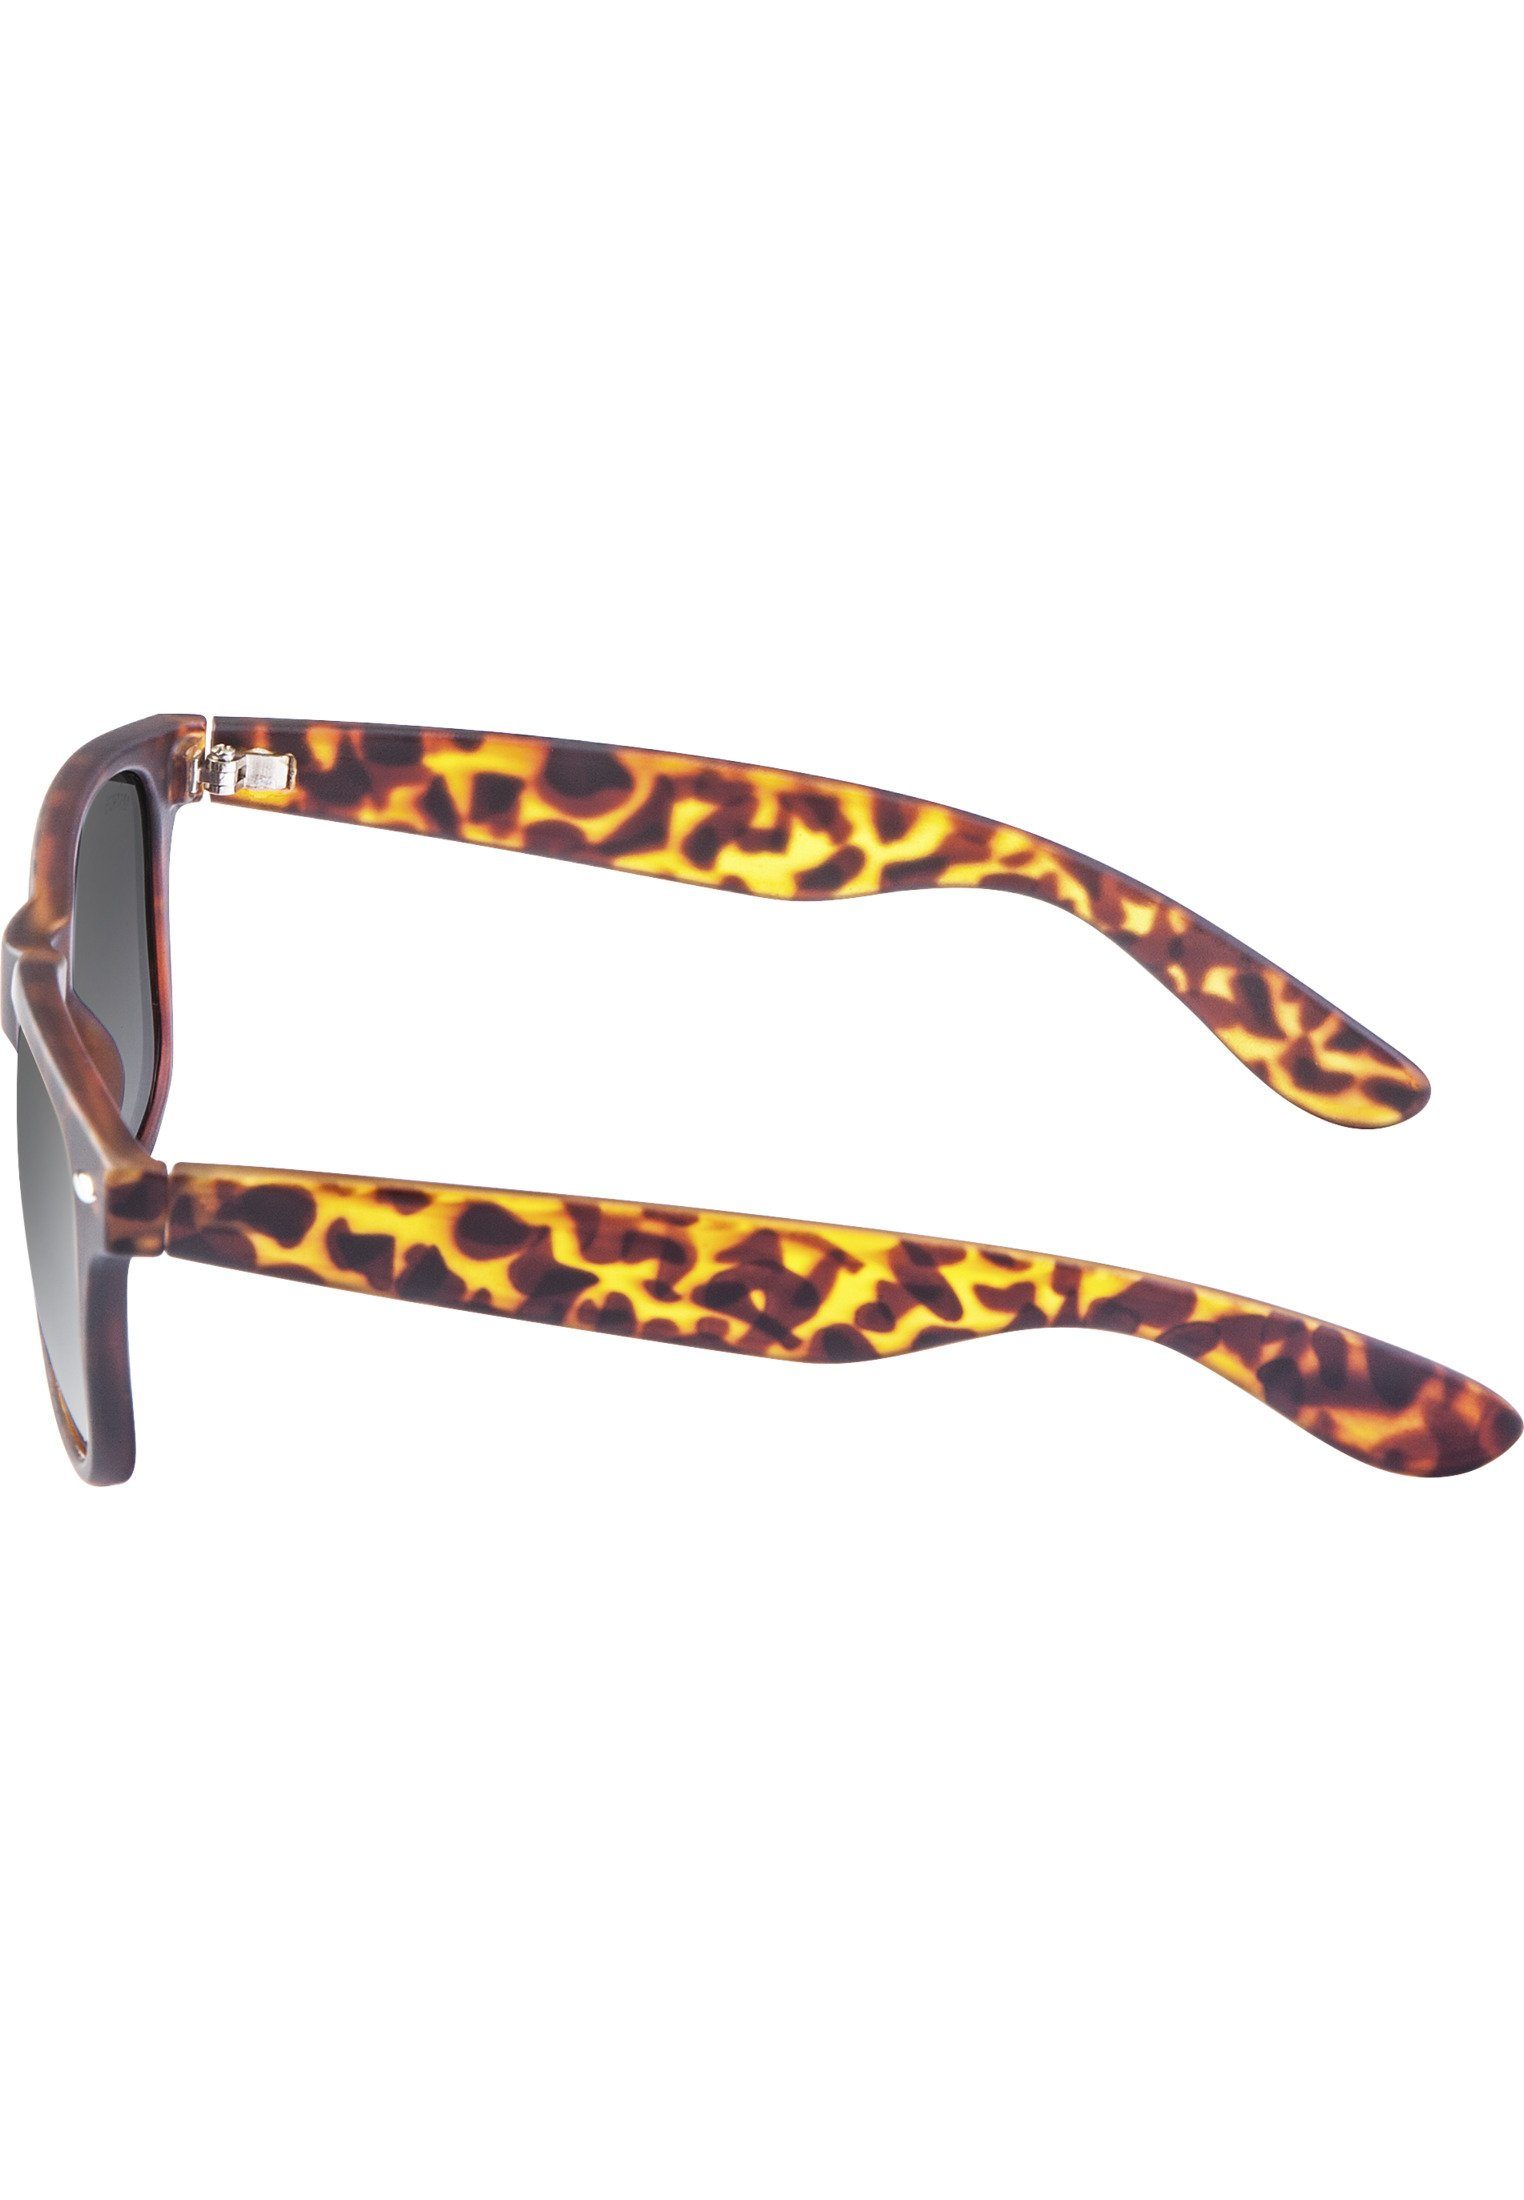 Accessoires Sonnenbrille Likoma Youth Sunglasses havanna/grey MSTRDS